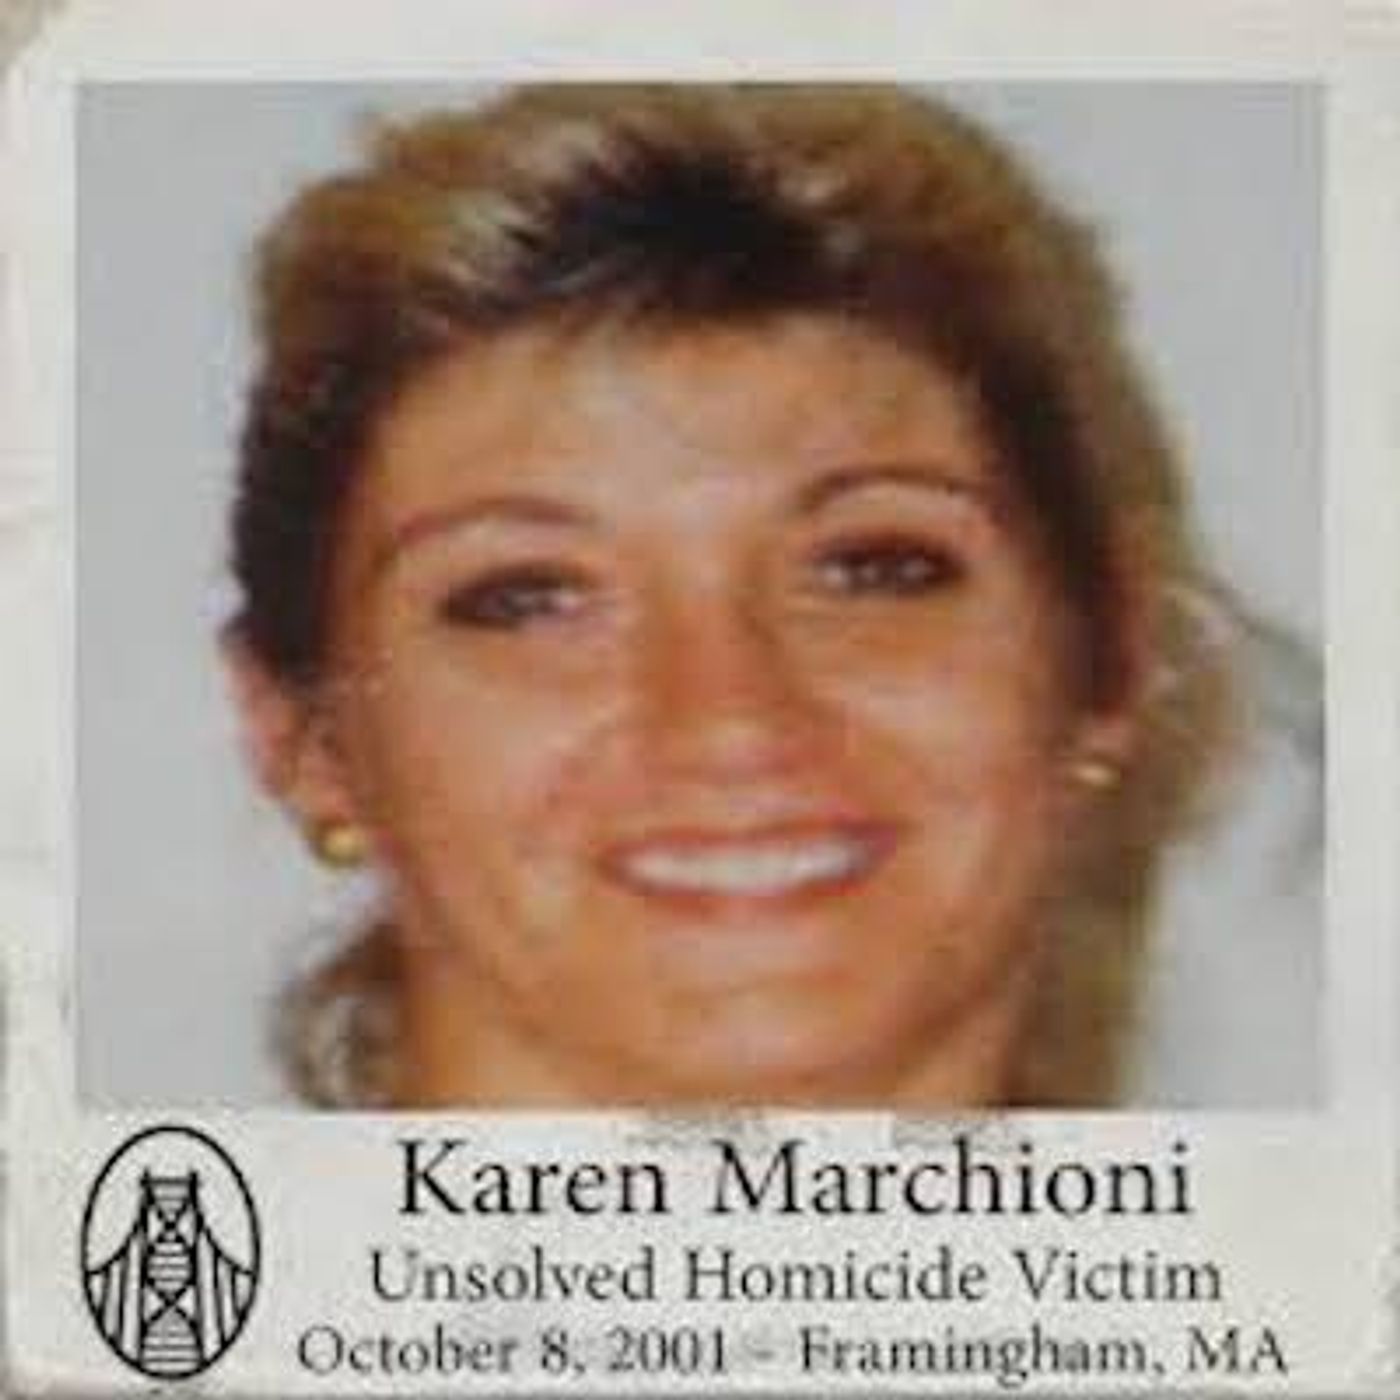 Episode 4: Karen Marchioni